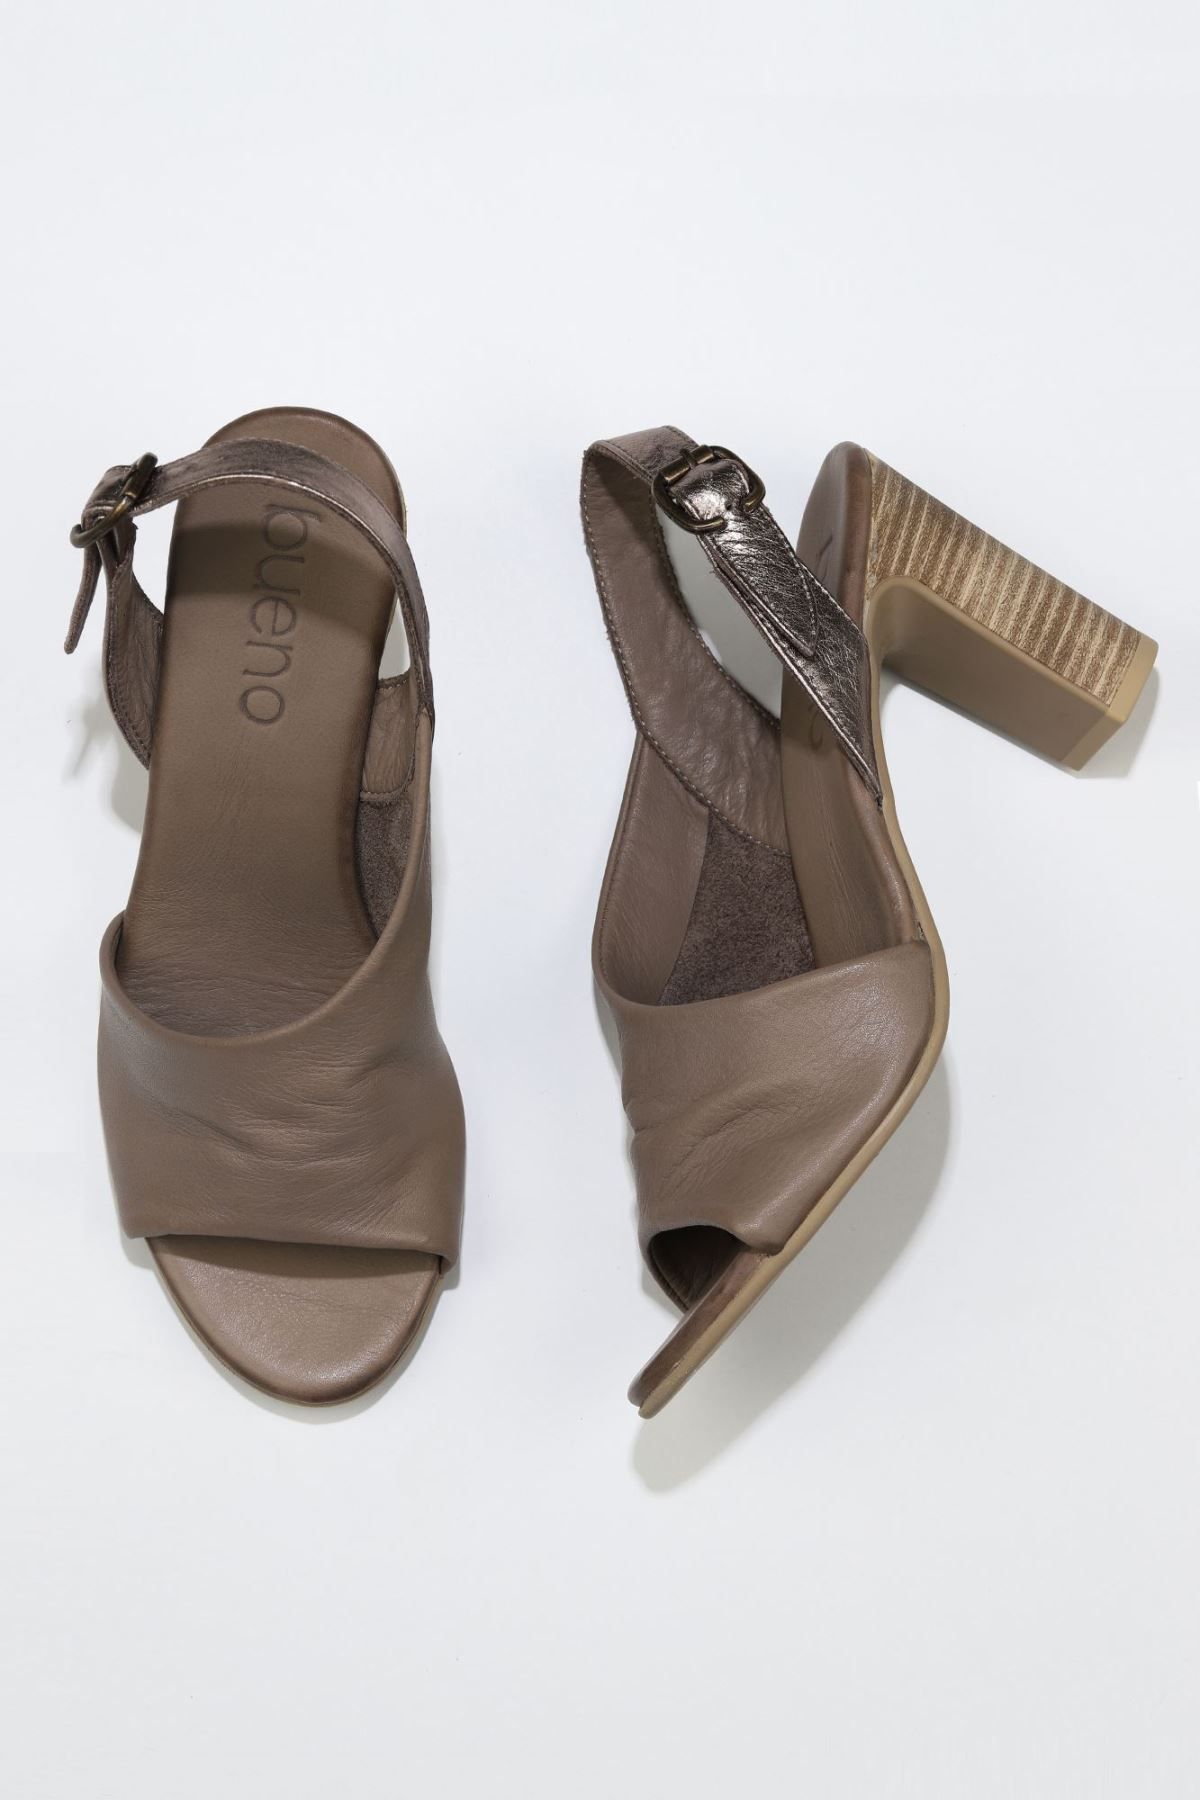 BUENO Shoes Gri Deri Kadın Topuklu Sandalet